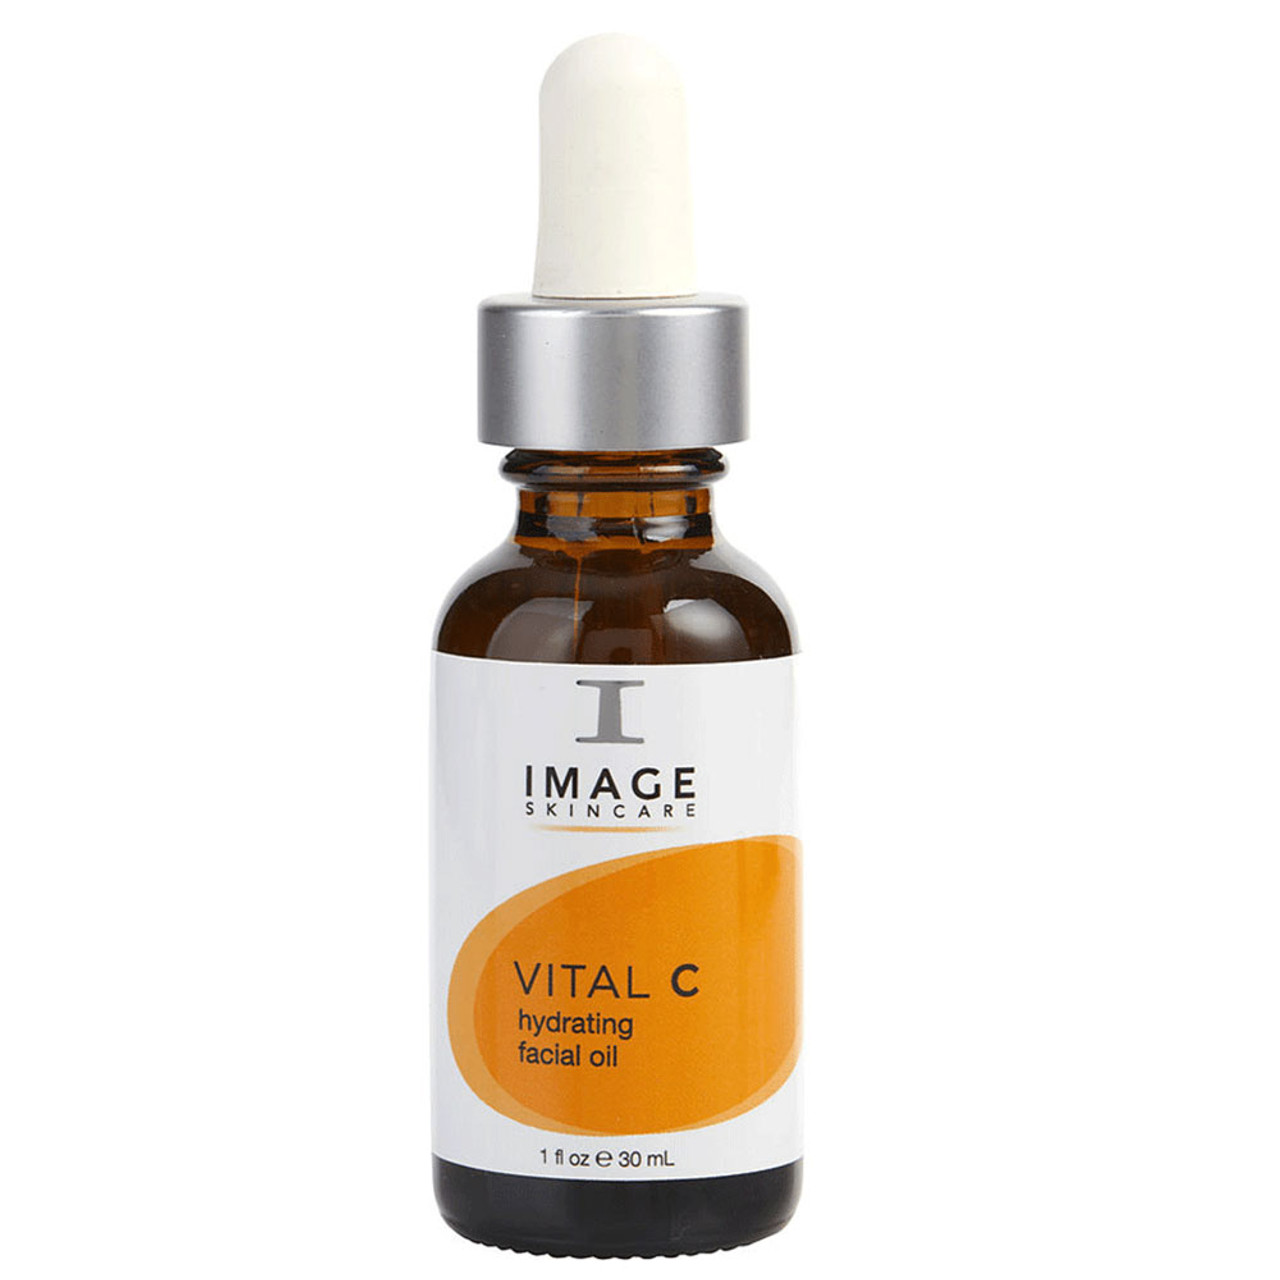 IMAGE Skincare VITAL C Hydrating Facial Oil BeautifiedYou.com